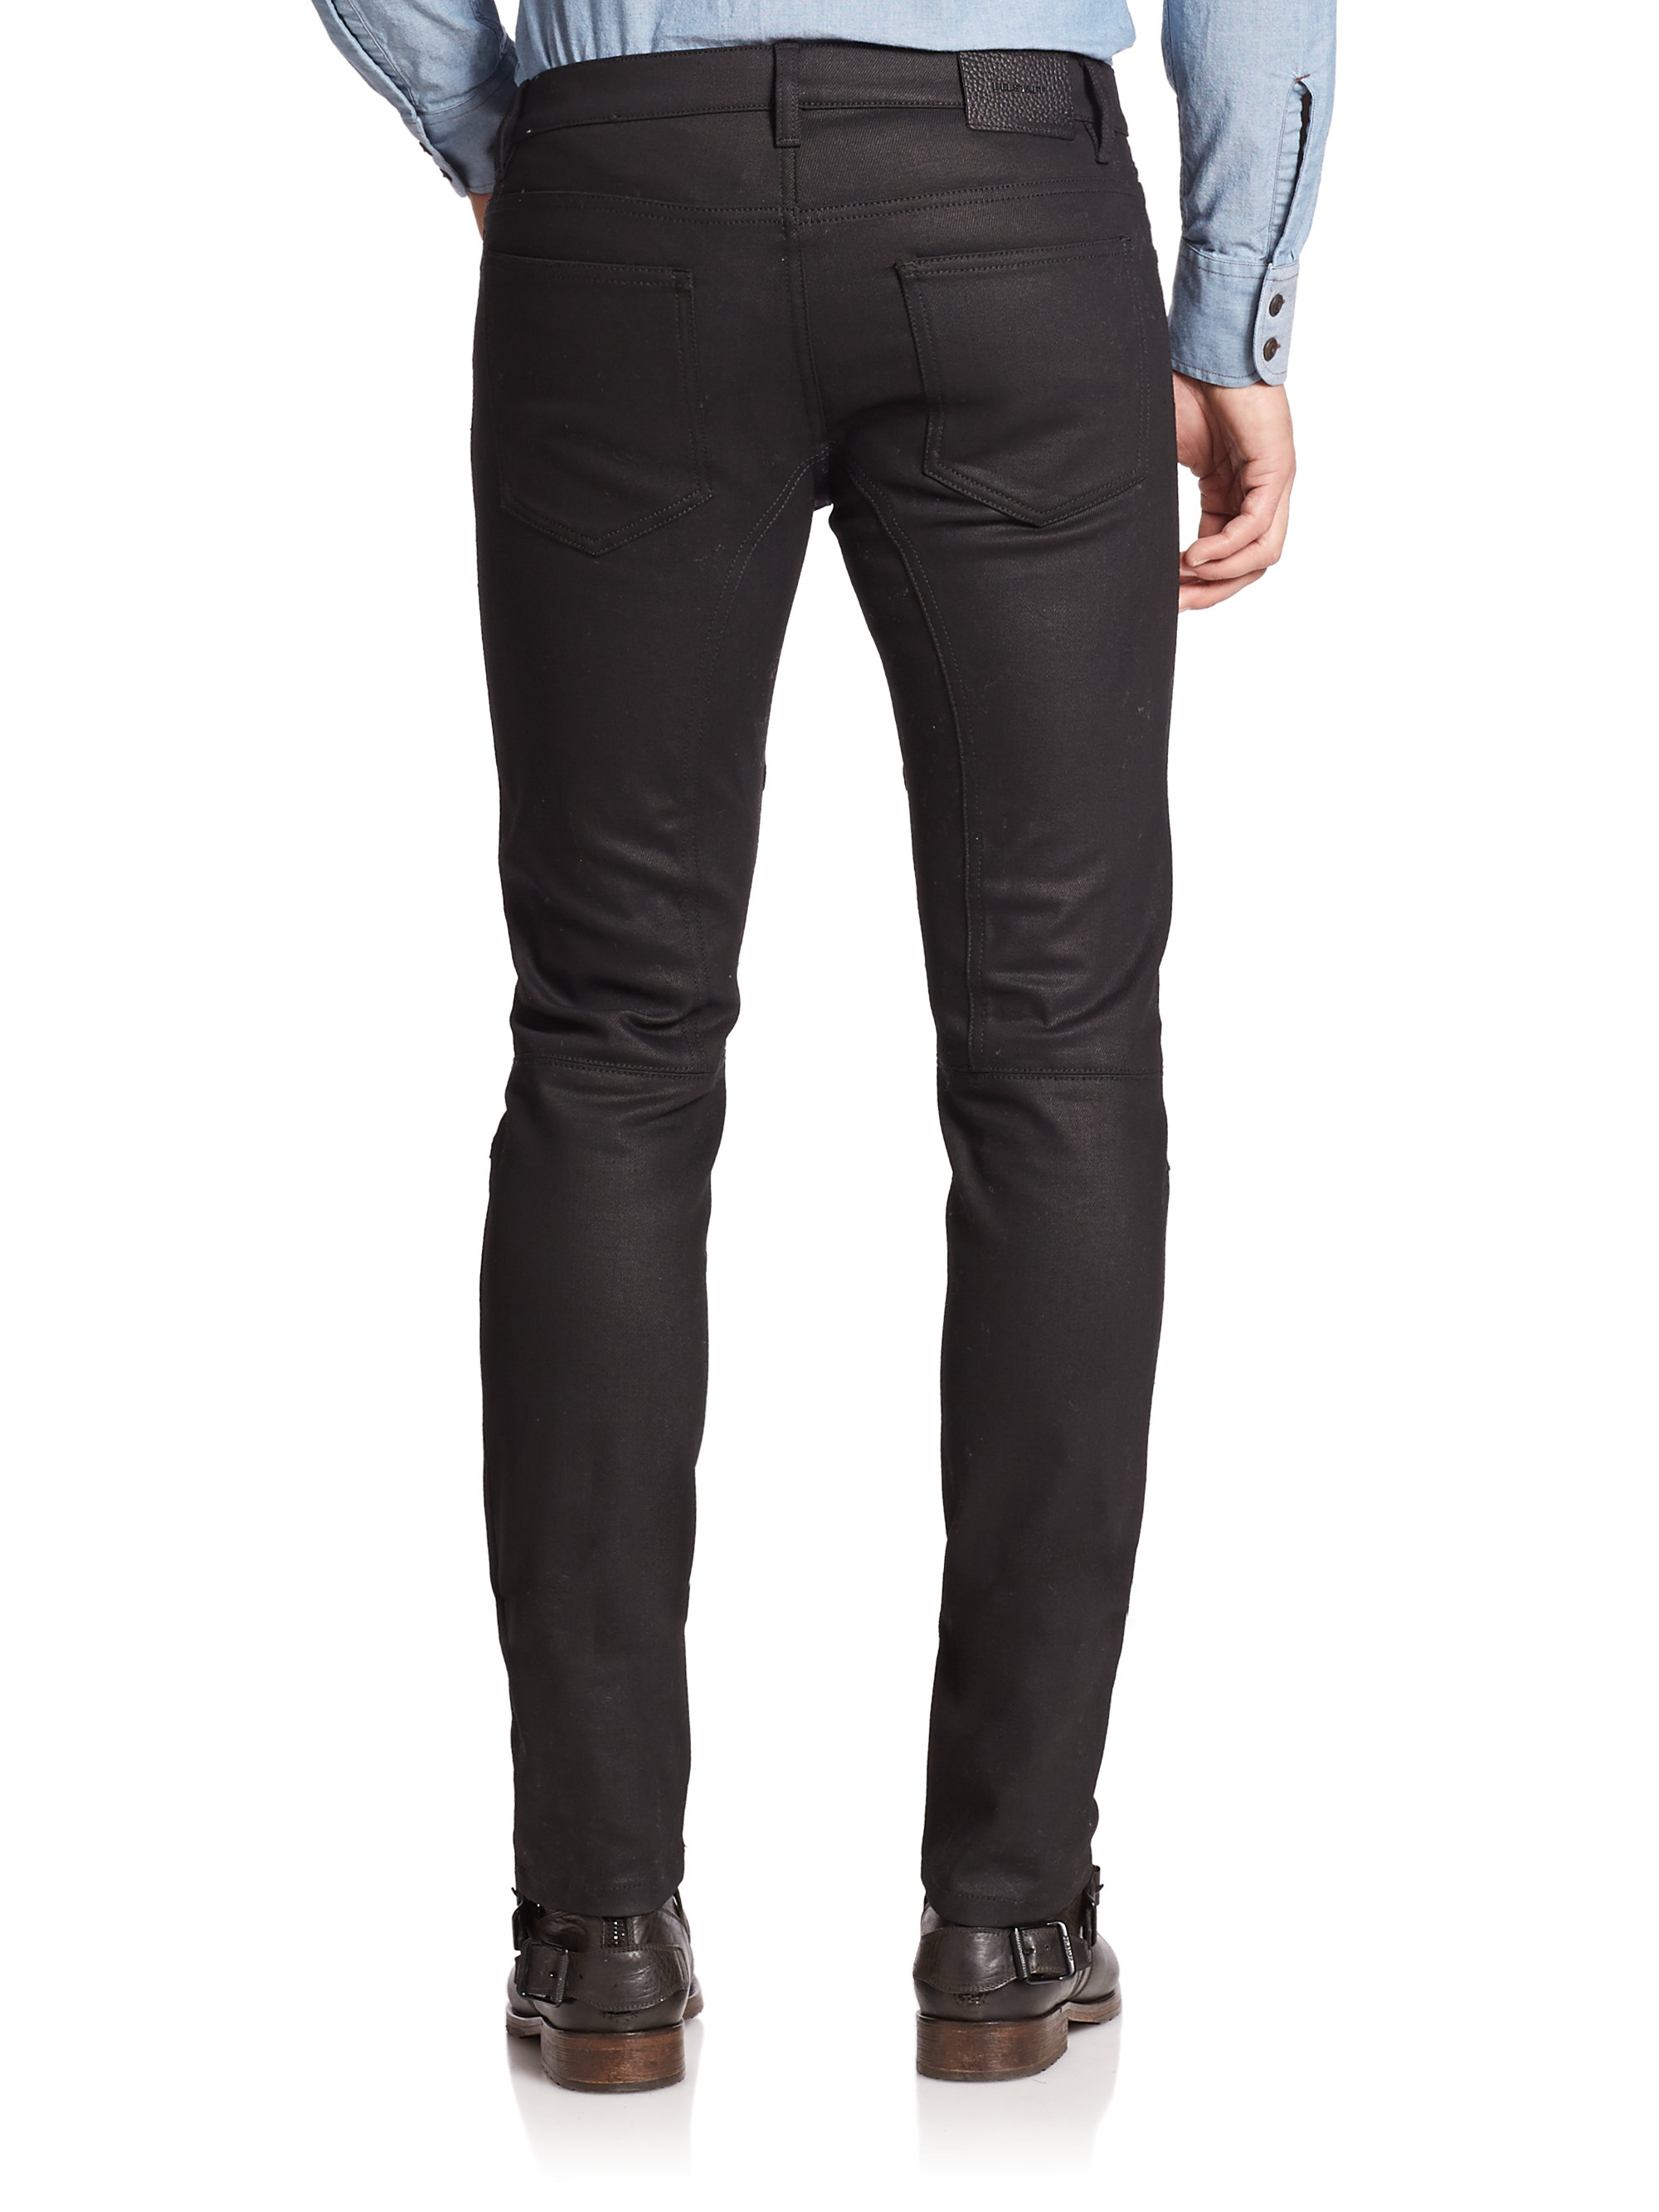 Belstaff Denim Slim-fit Moto Jeans in Black for Men - Lyst